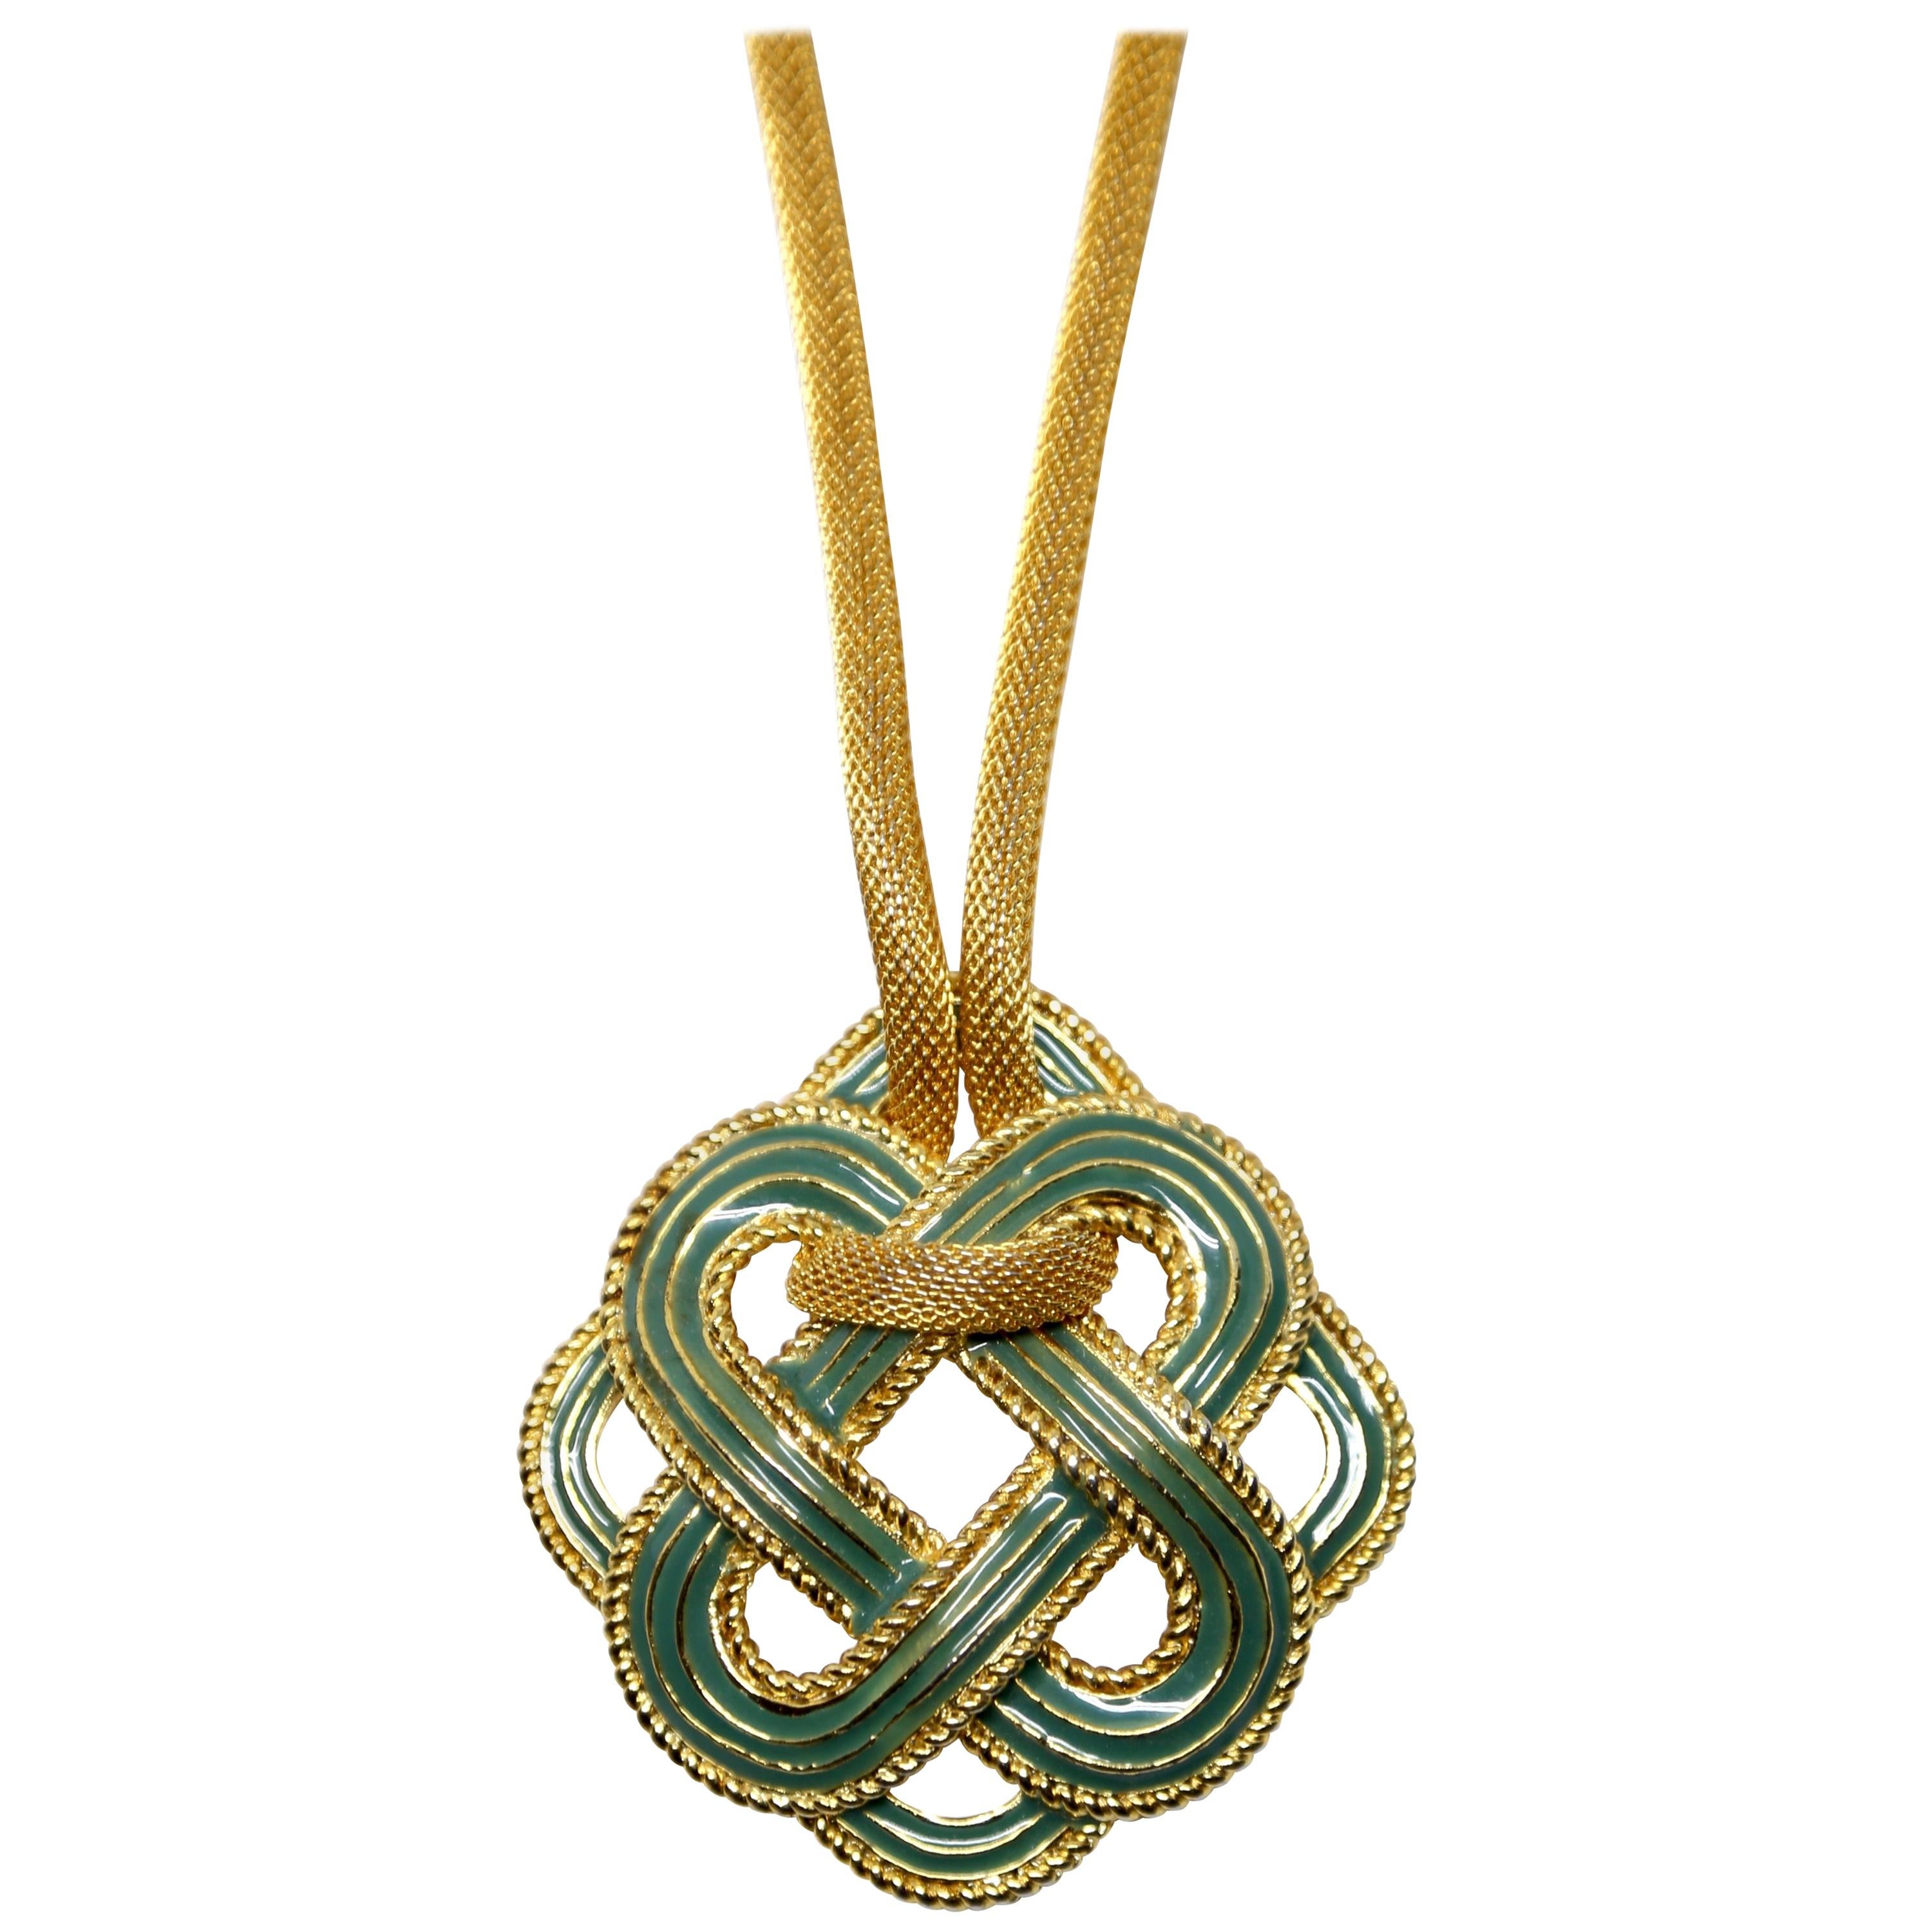 1970's LANVIN turquoise enamel and gilt metal modernist pendant necklace